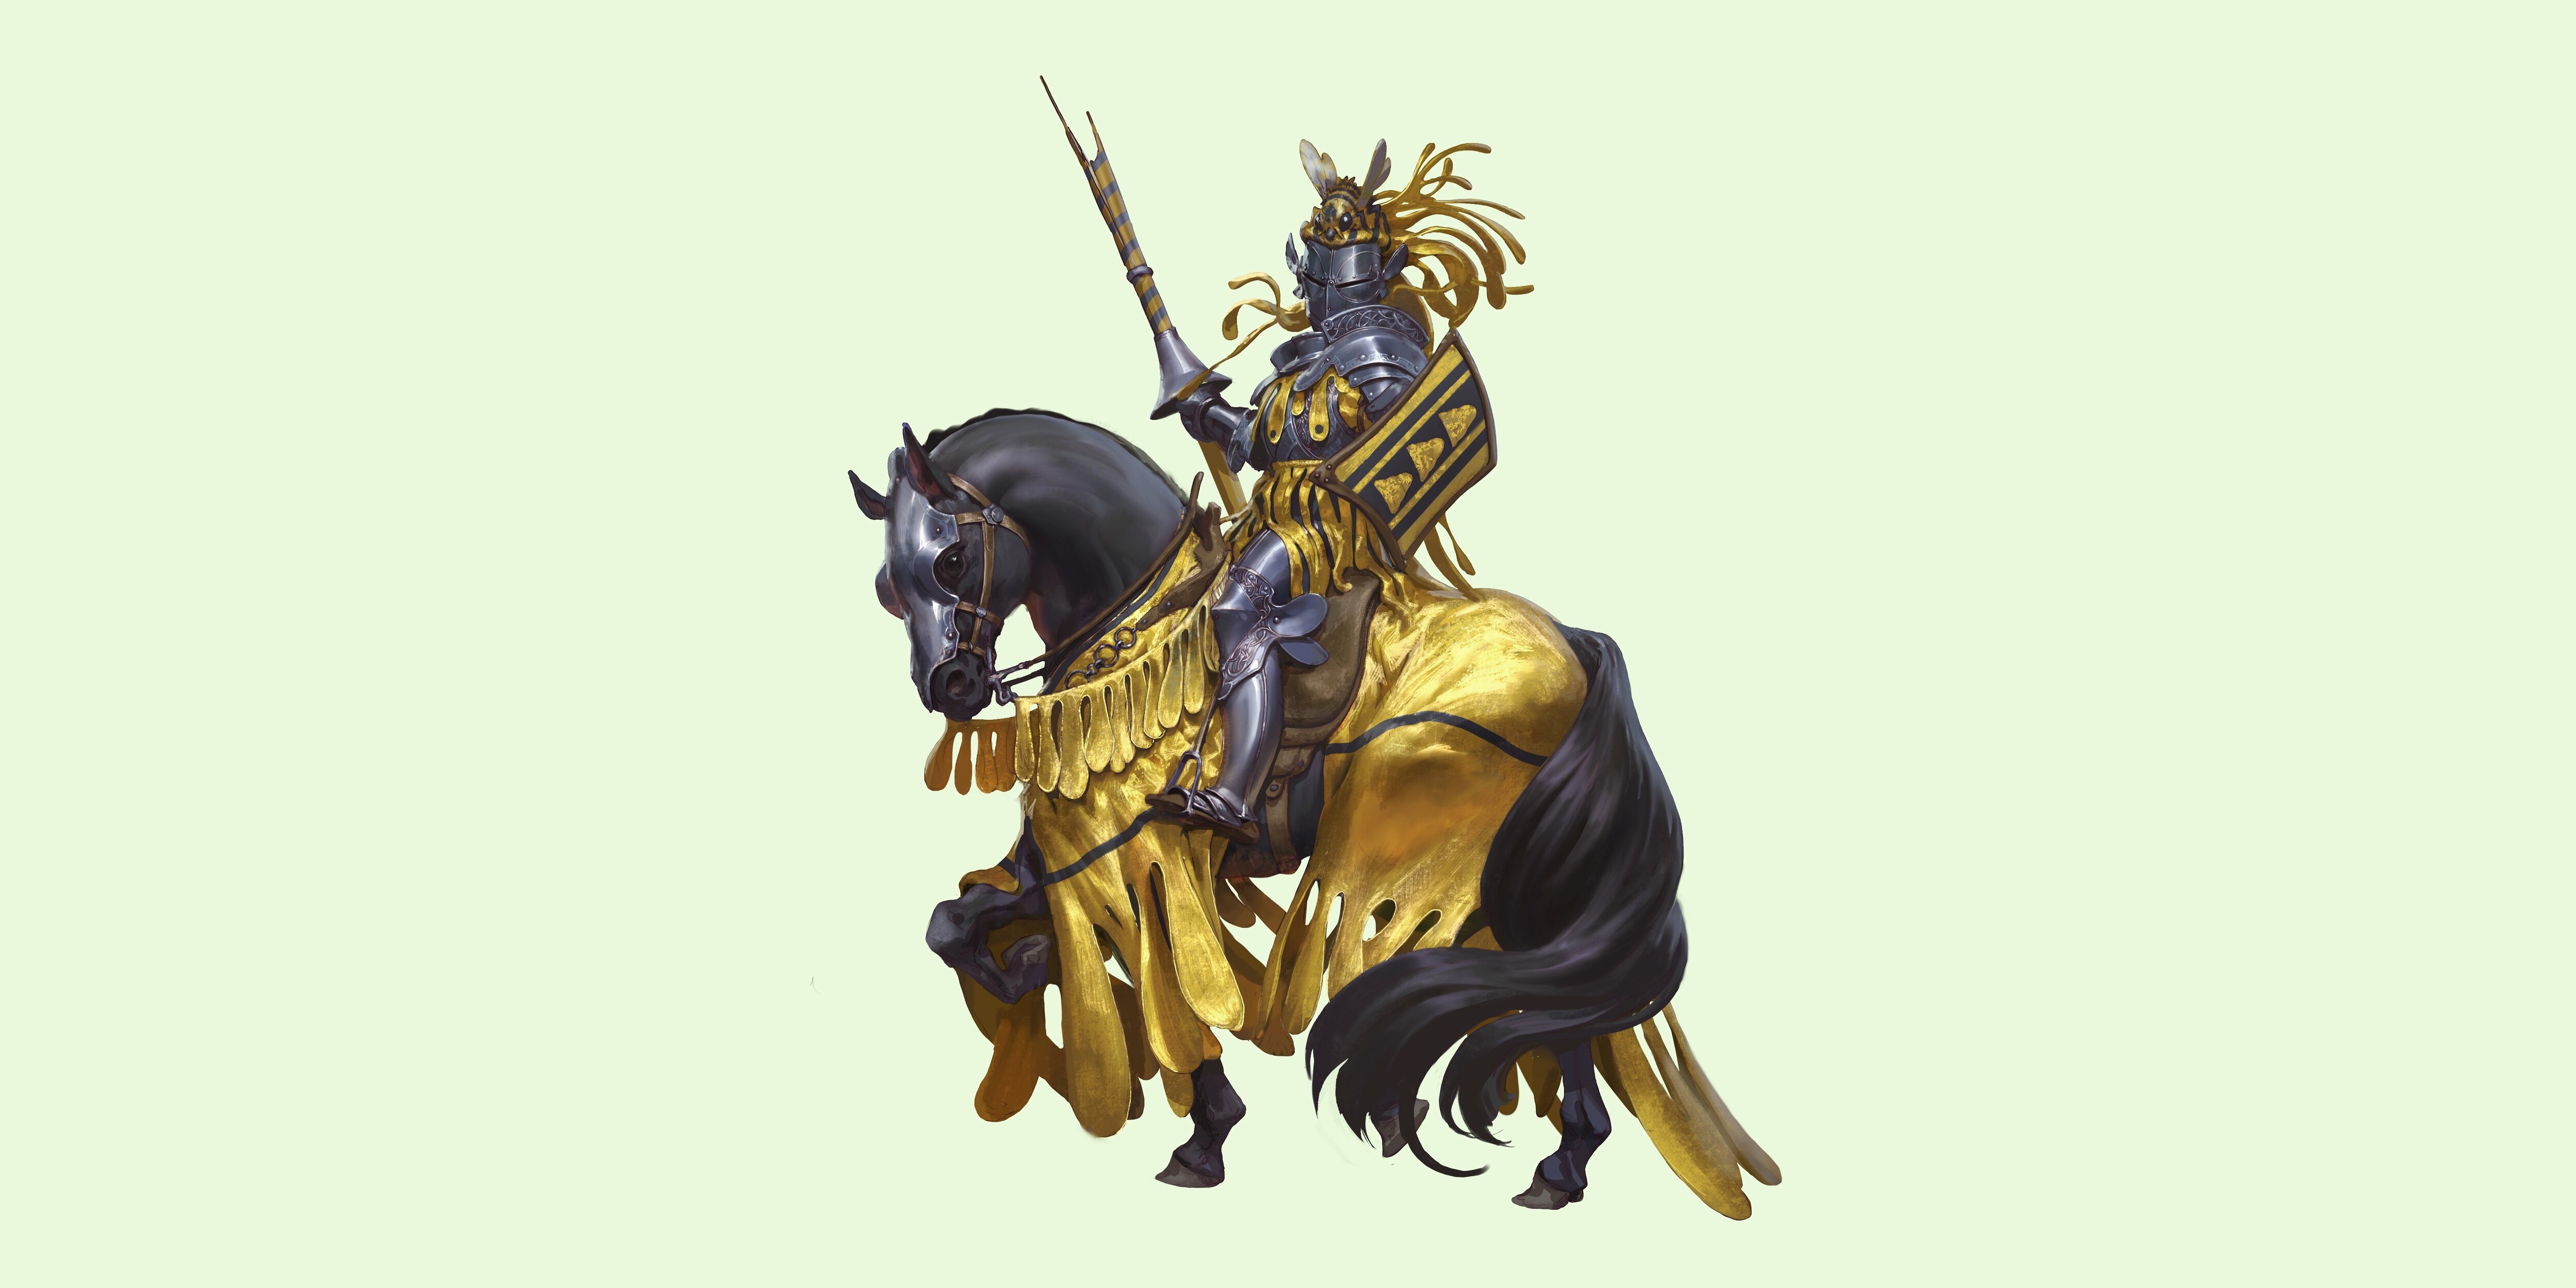 PCデスクトップにファンタジー, 馬, シールド, 戦士, 騎士, 鎧画像を無料でダウンロード